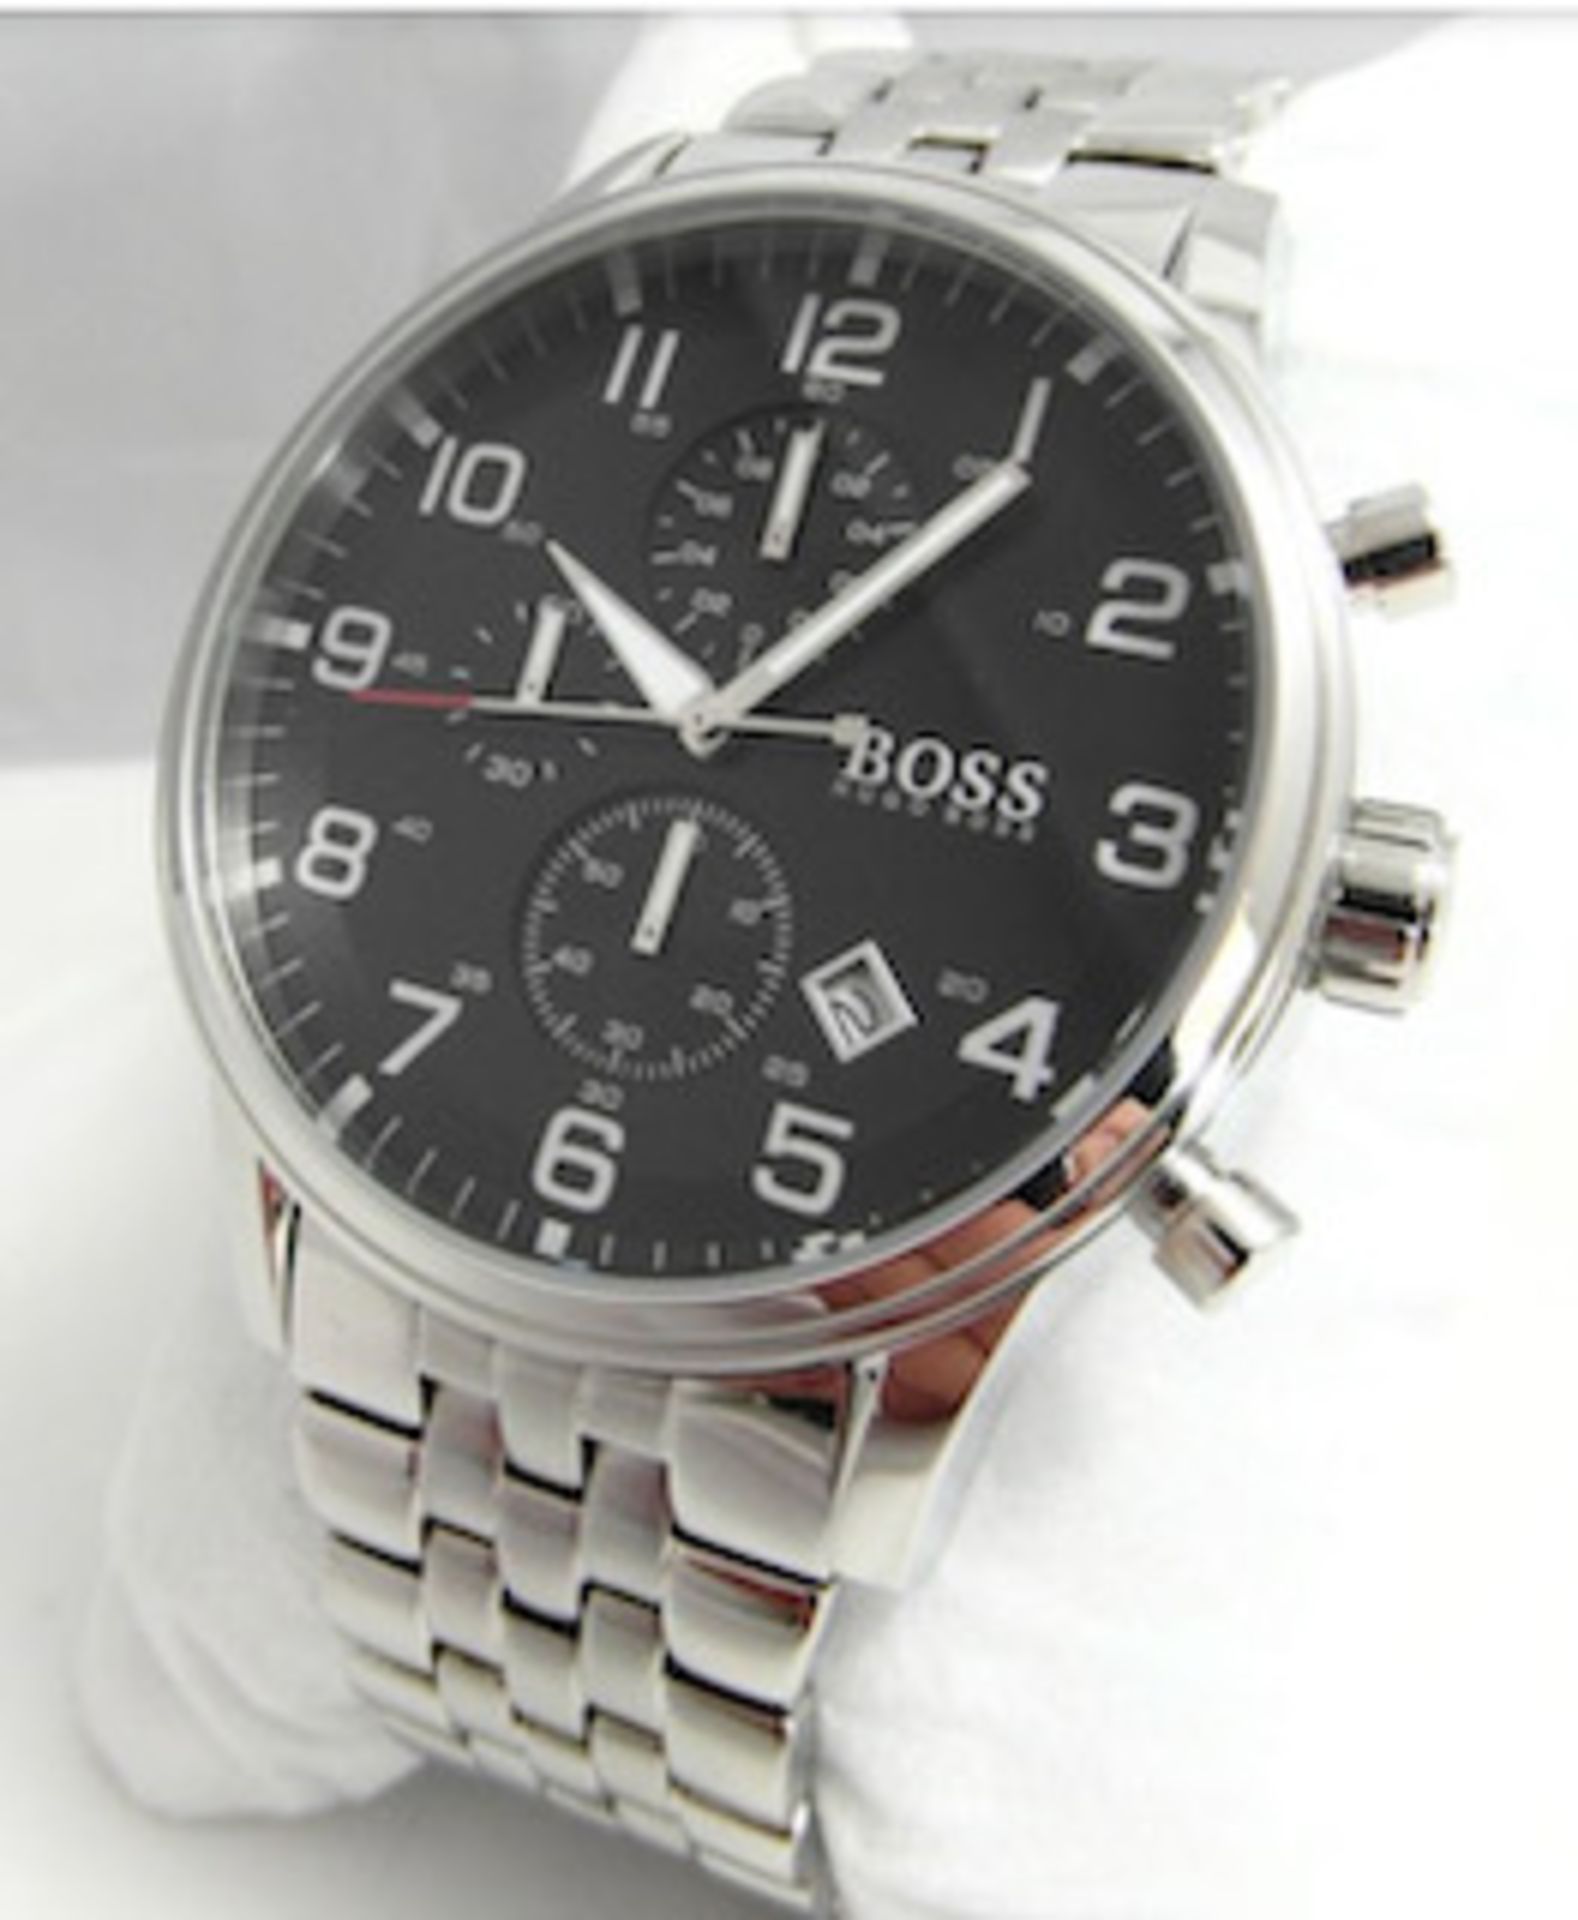 Hugo Boss 1512446 Men's Aeroliner Black Dial Silver Bracelet Chronograph Watch - Image 4 of 6